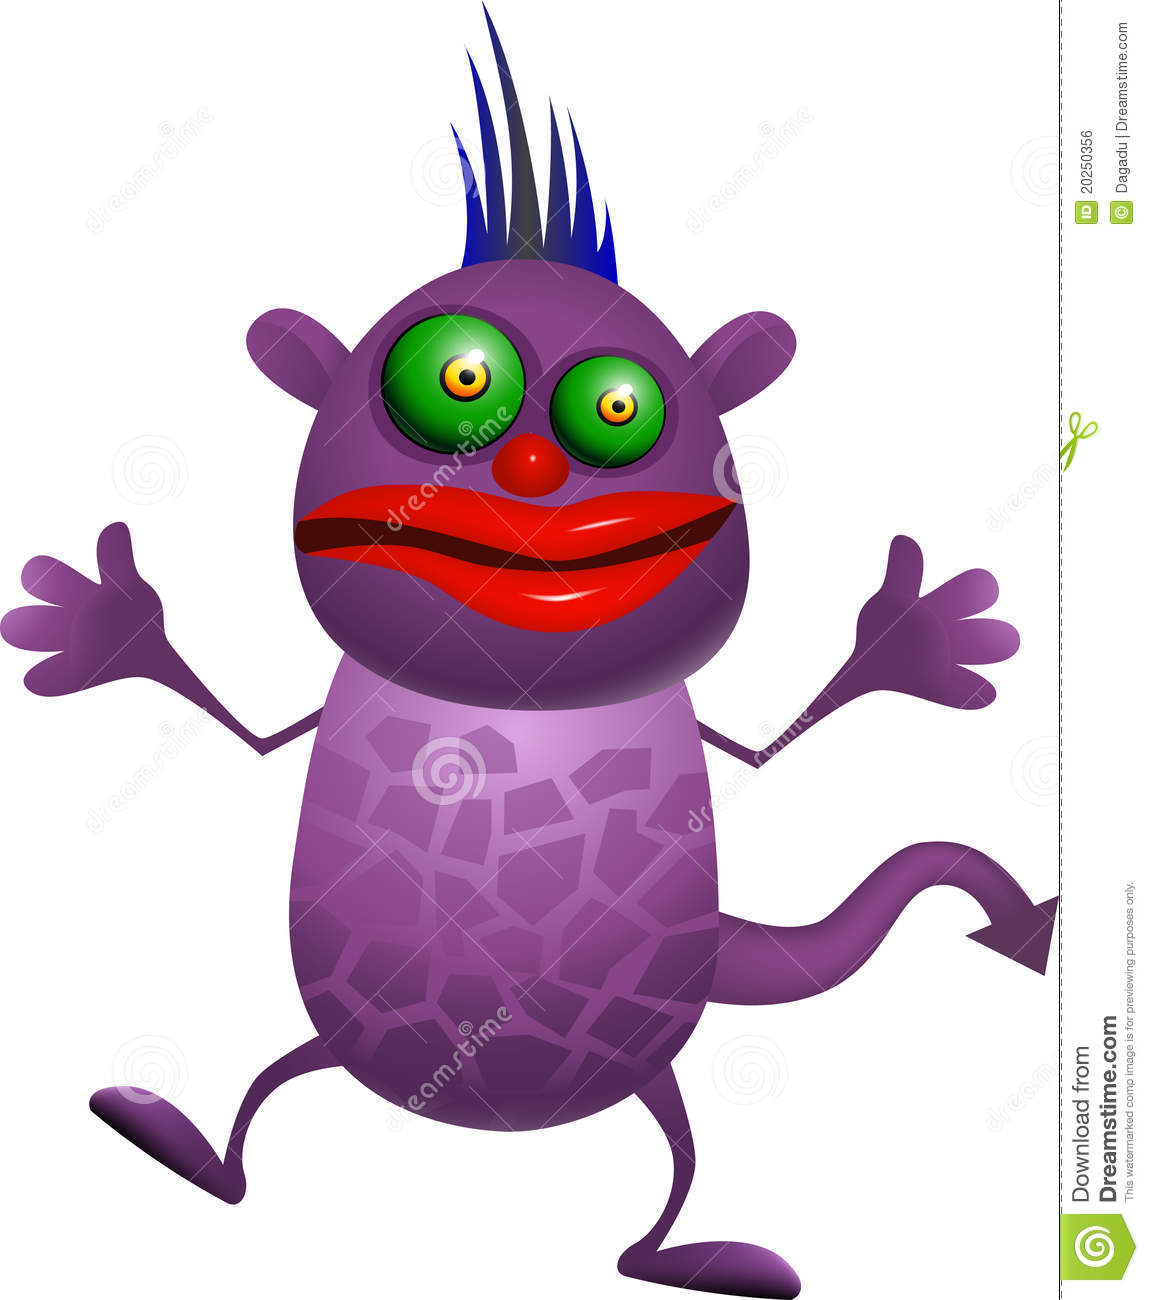 Purple Monster Royalty Free Stock Image   Image  20250356